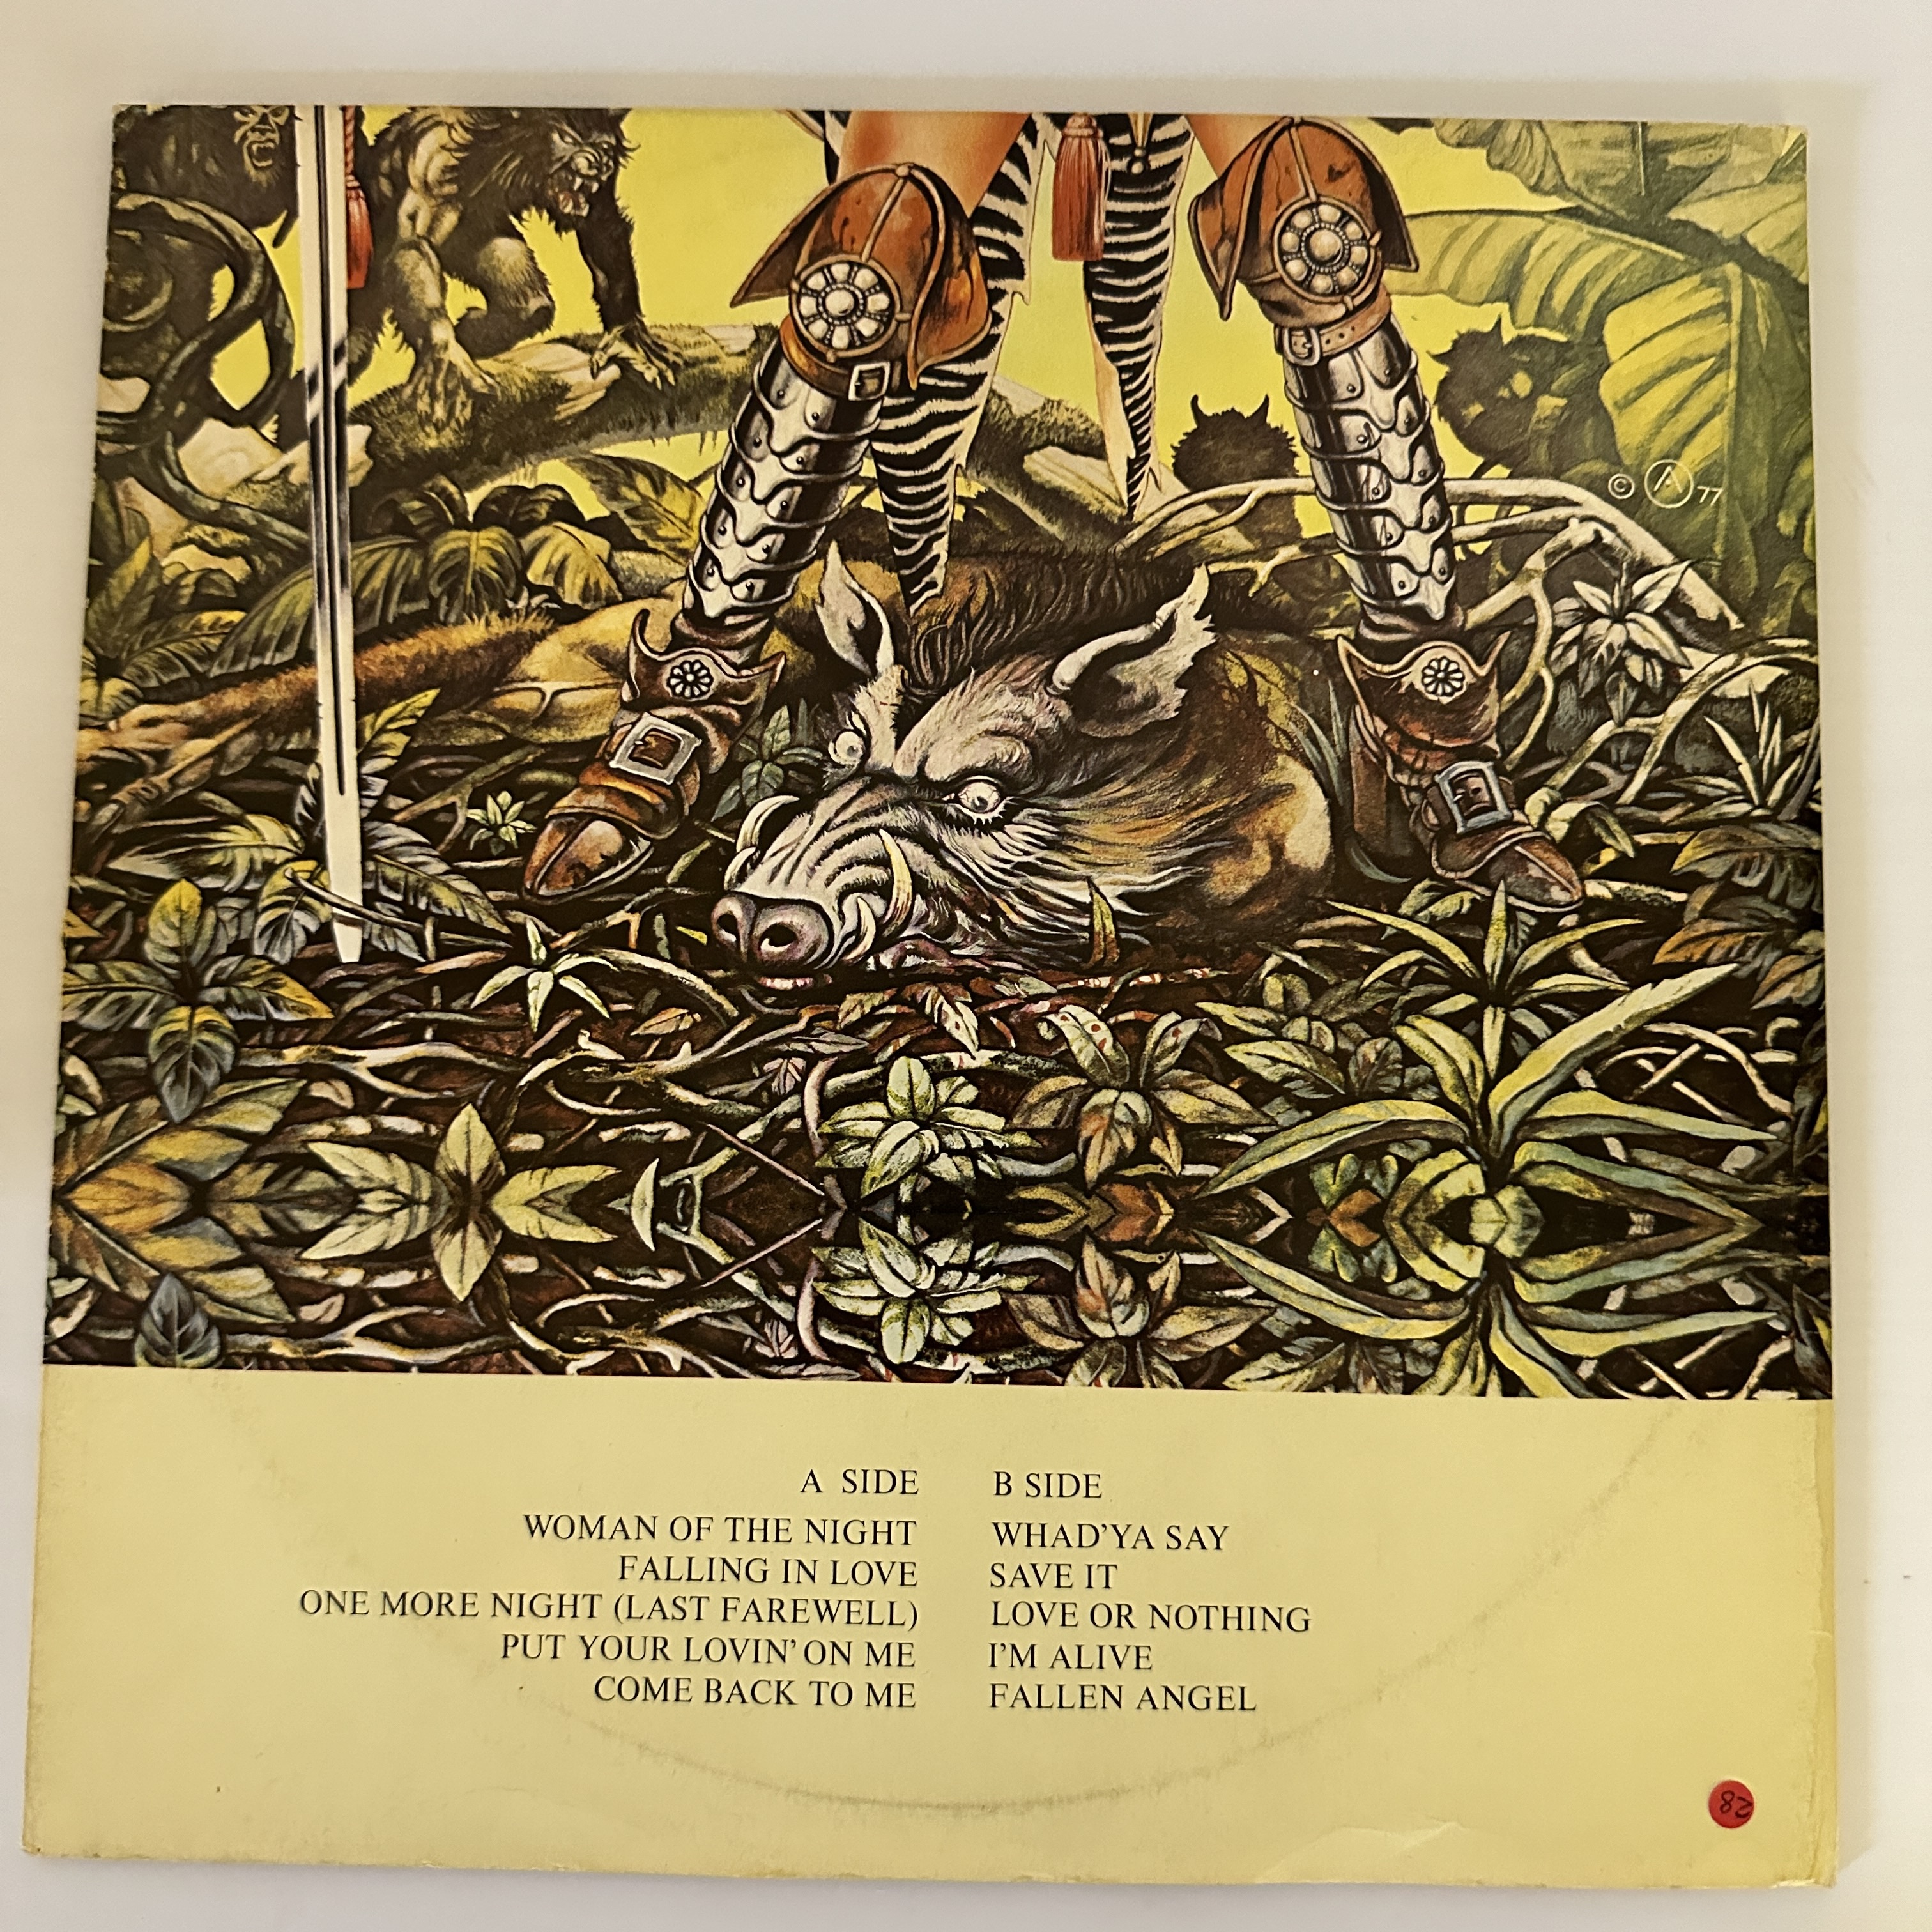 An Uriah Heep - Fallen Angel vinyl LP - Image 6 of 12